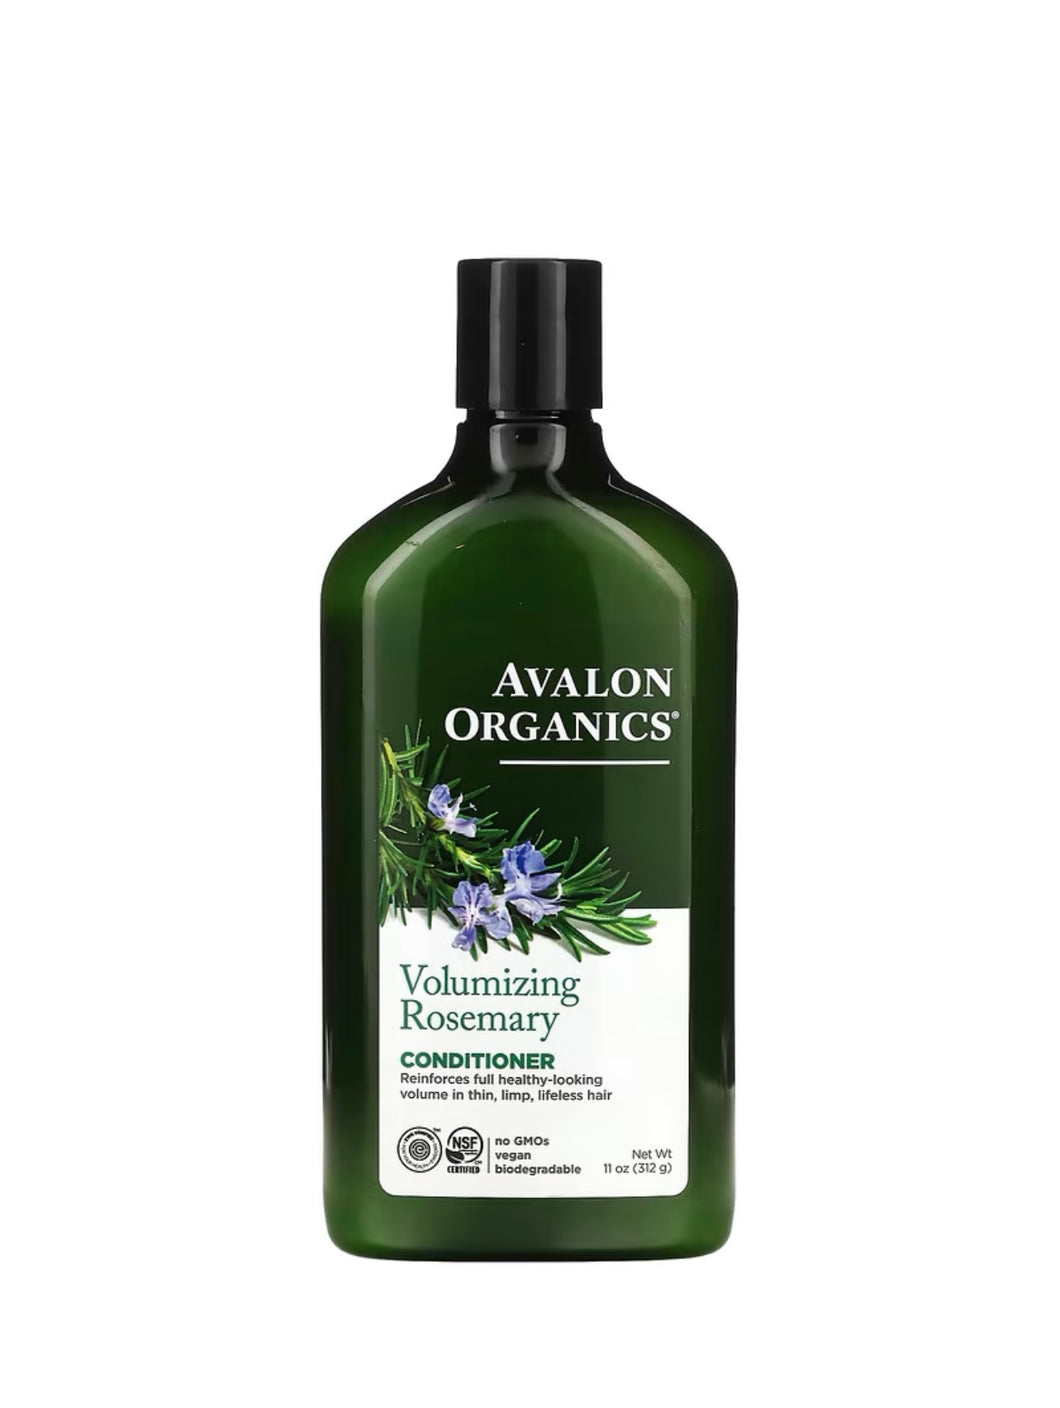 Avalon Organics Volumizing Rosemary
CONDITIONER